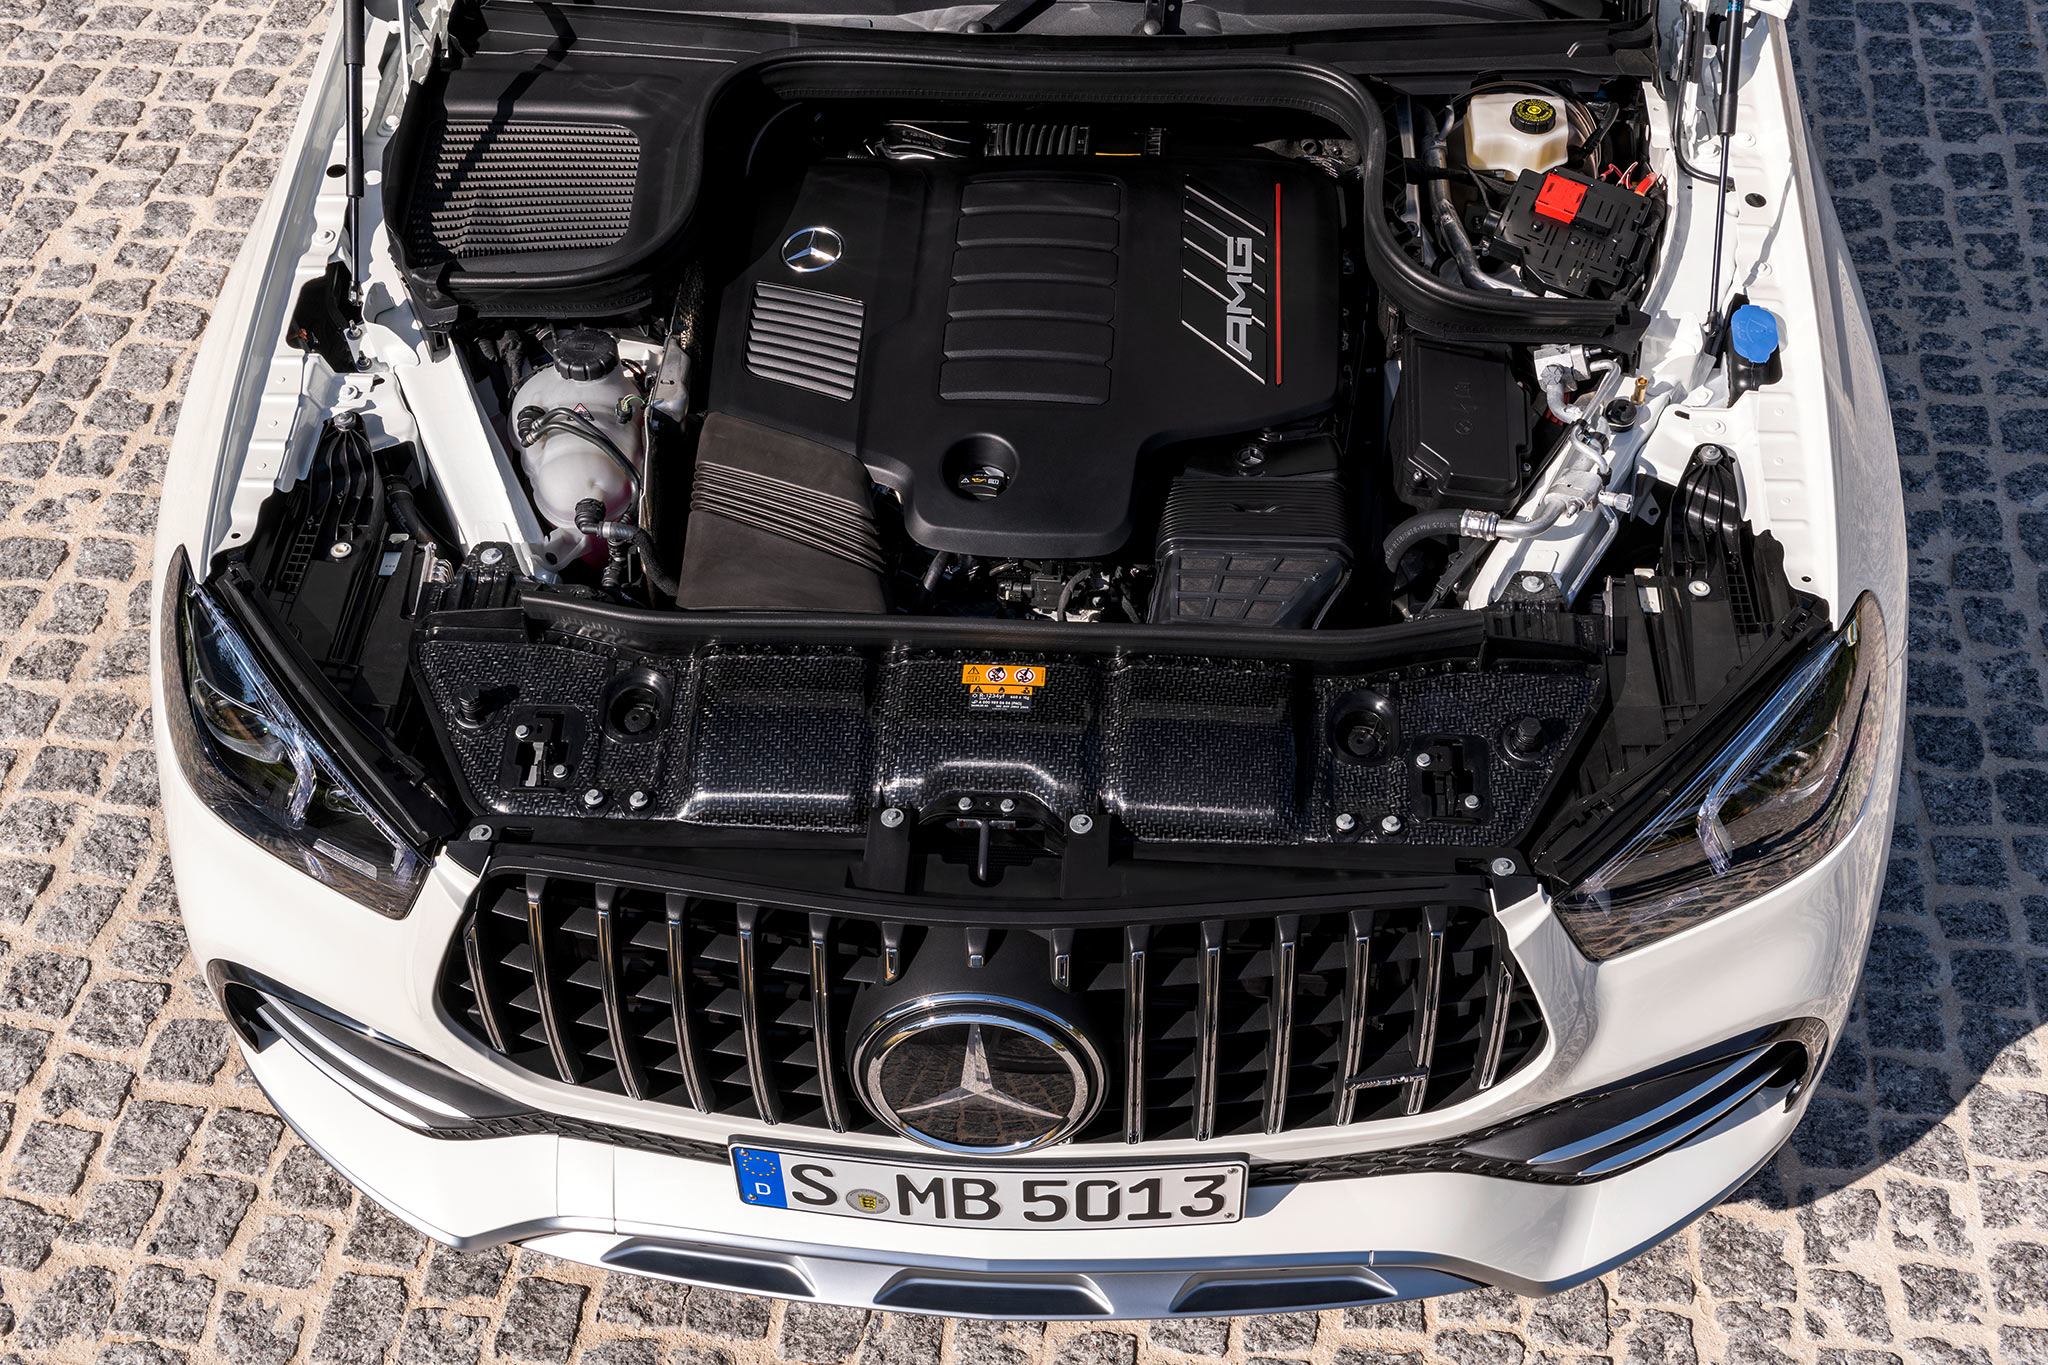 Mercedes-AMG GLE 4MATIC+ Coupe ra mắt tại Việt Nam, giá 5,349 tỷ đồng gle-53-coupe-03.jpg